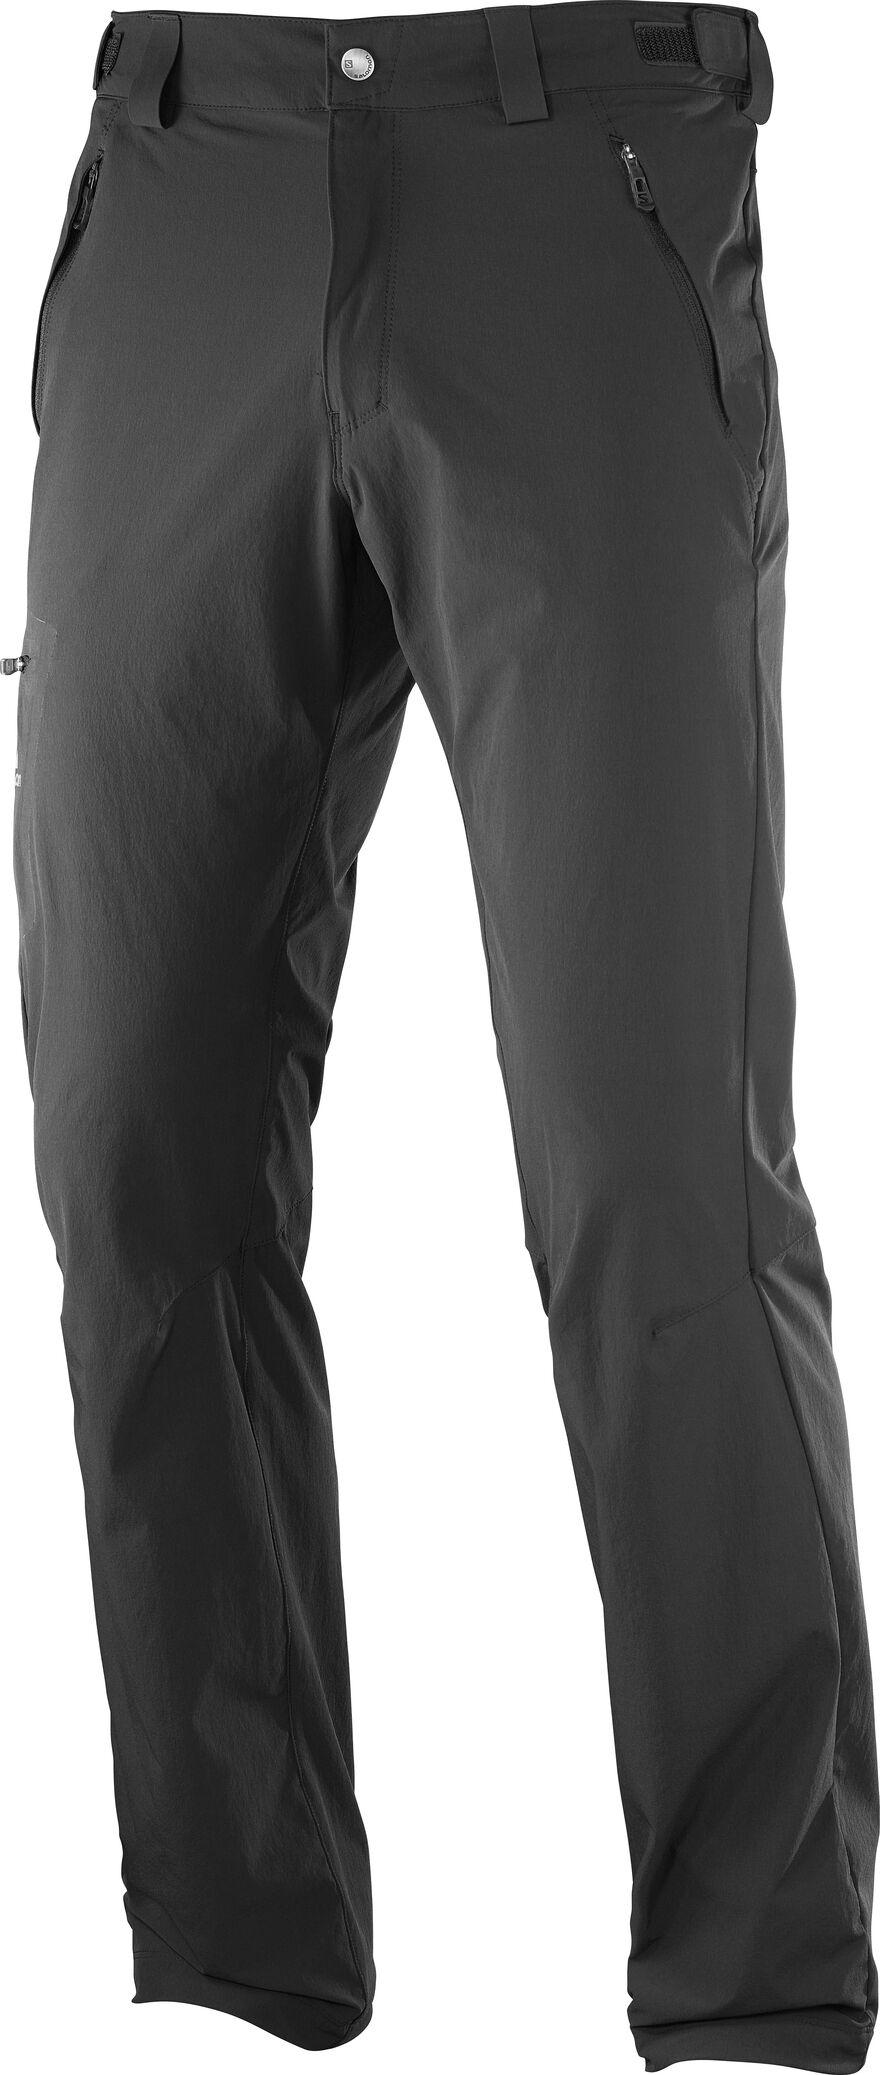 Salomon - Wayfarer Pant - Trekking trousers - Men's